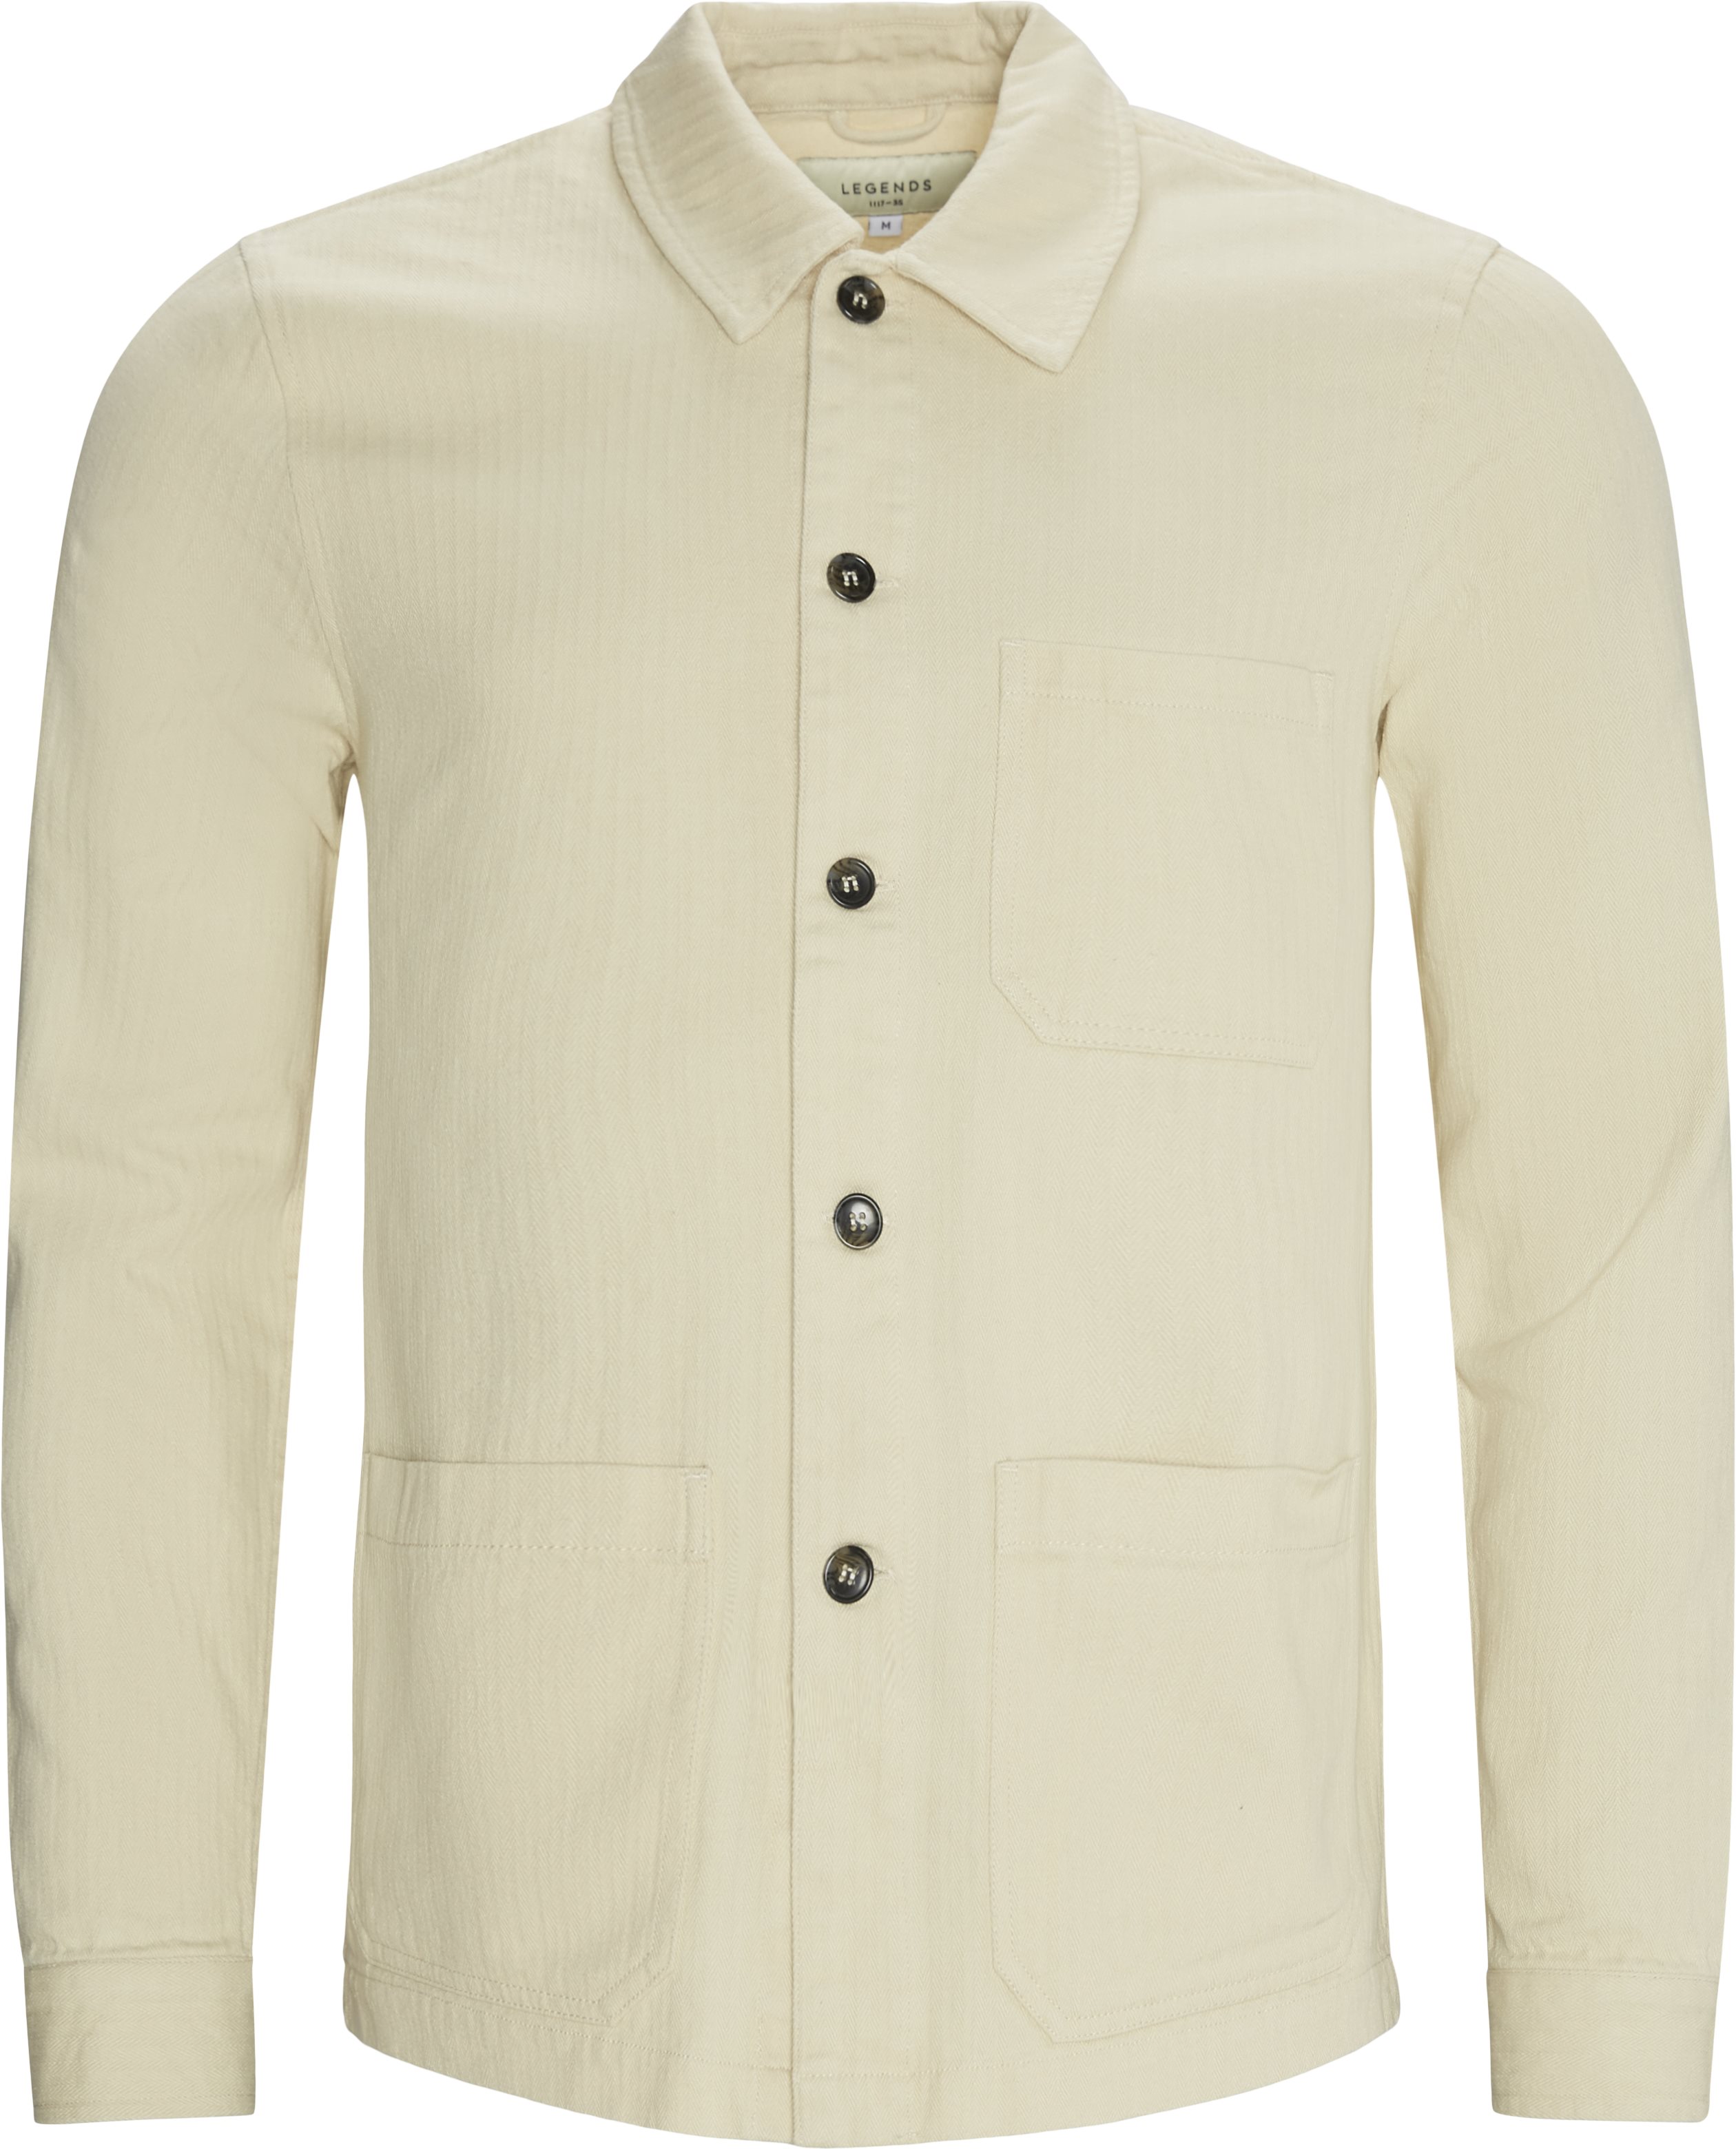 Napoli Work Shirt - Skjorter - Regular fit - Hvid